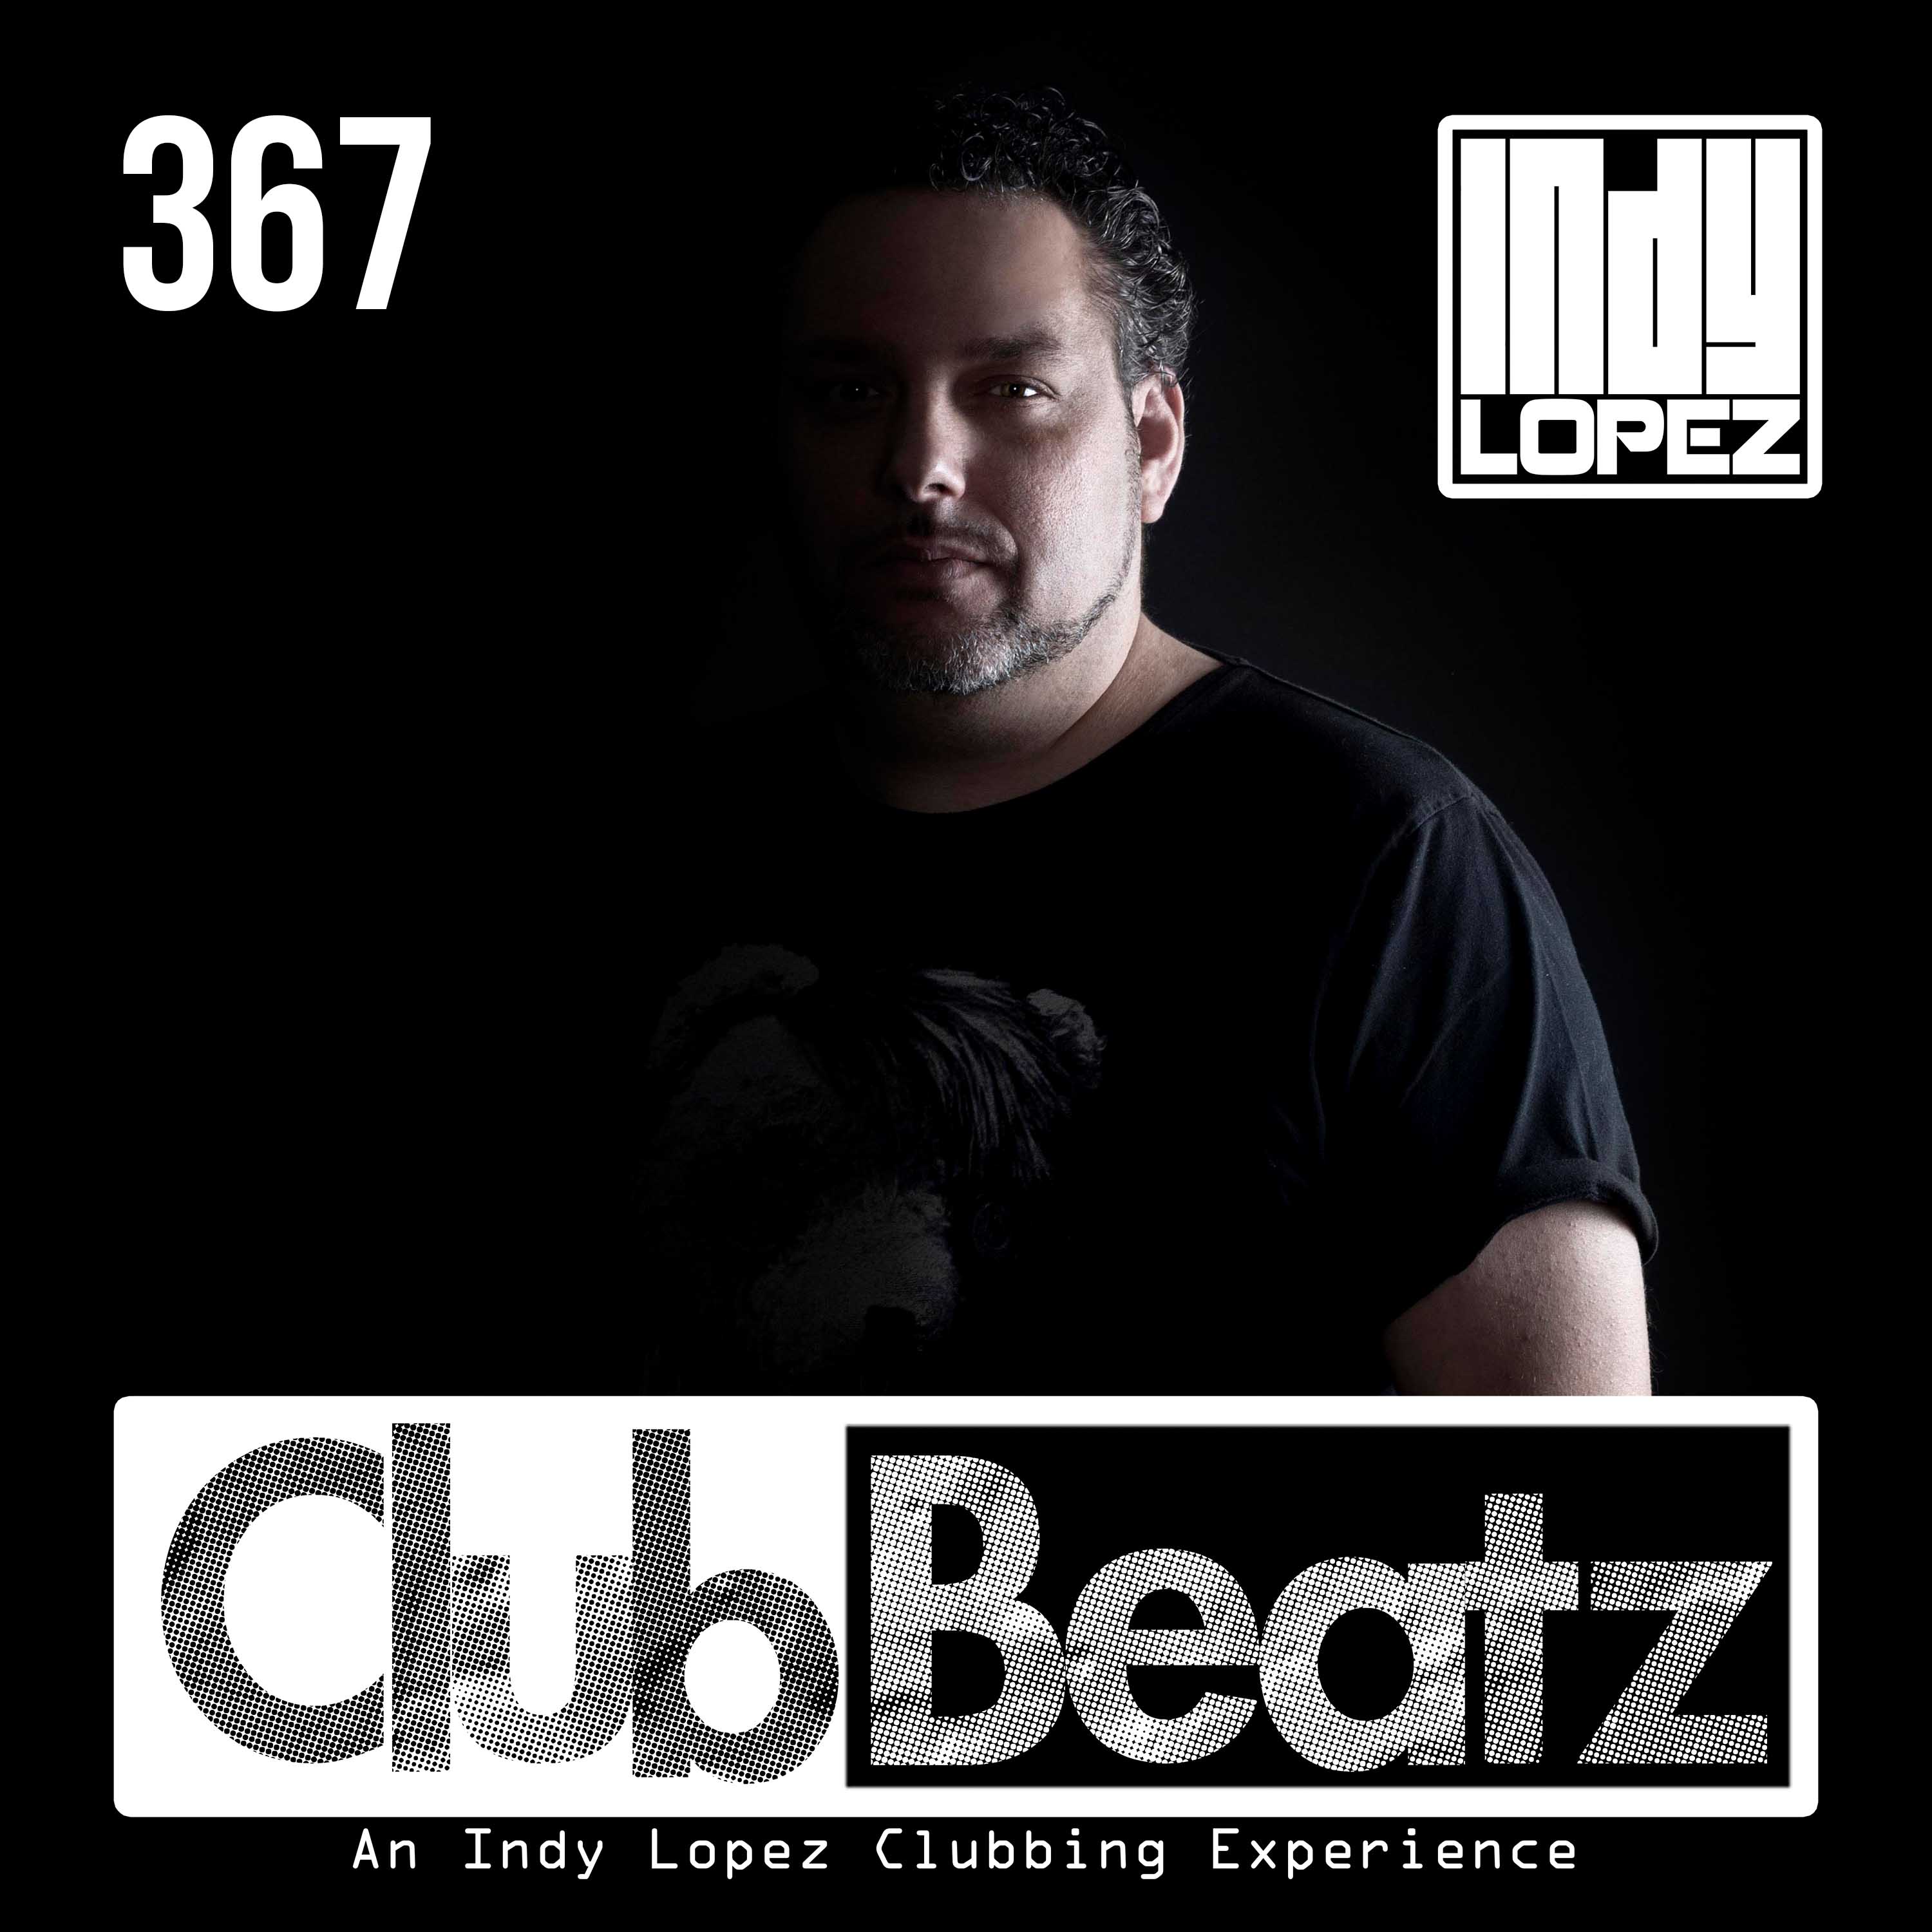 Chapter 367 Club Beatz